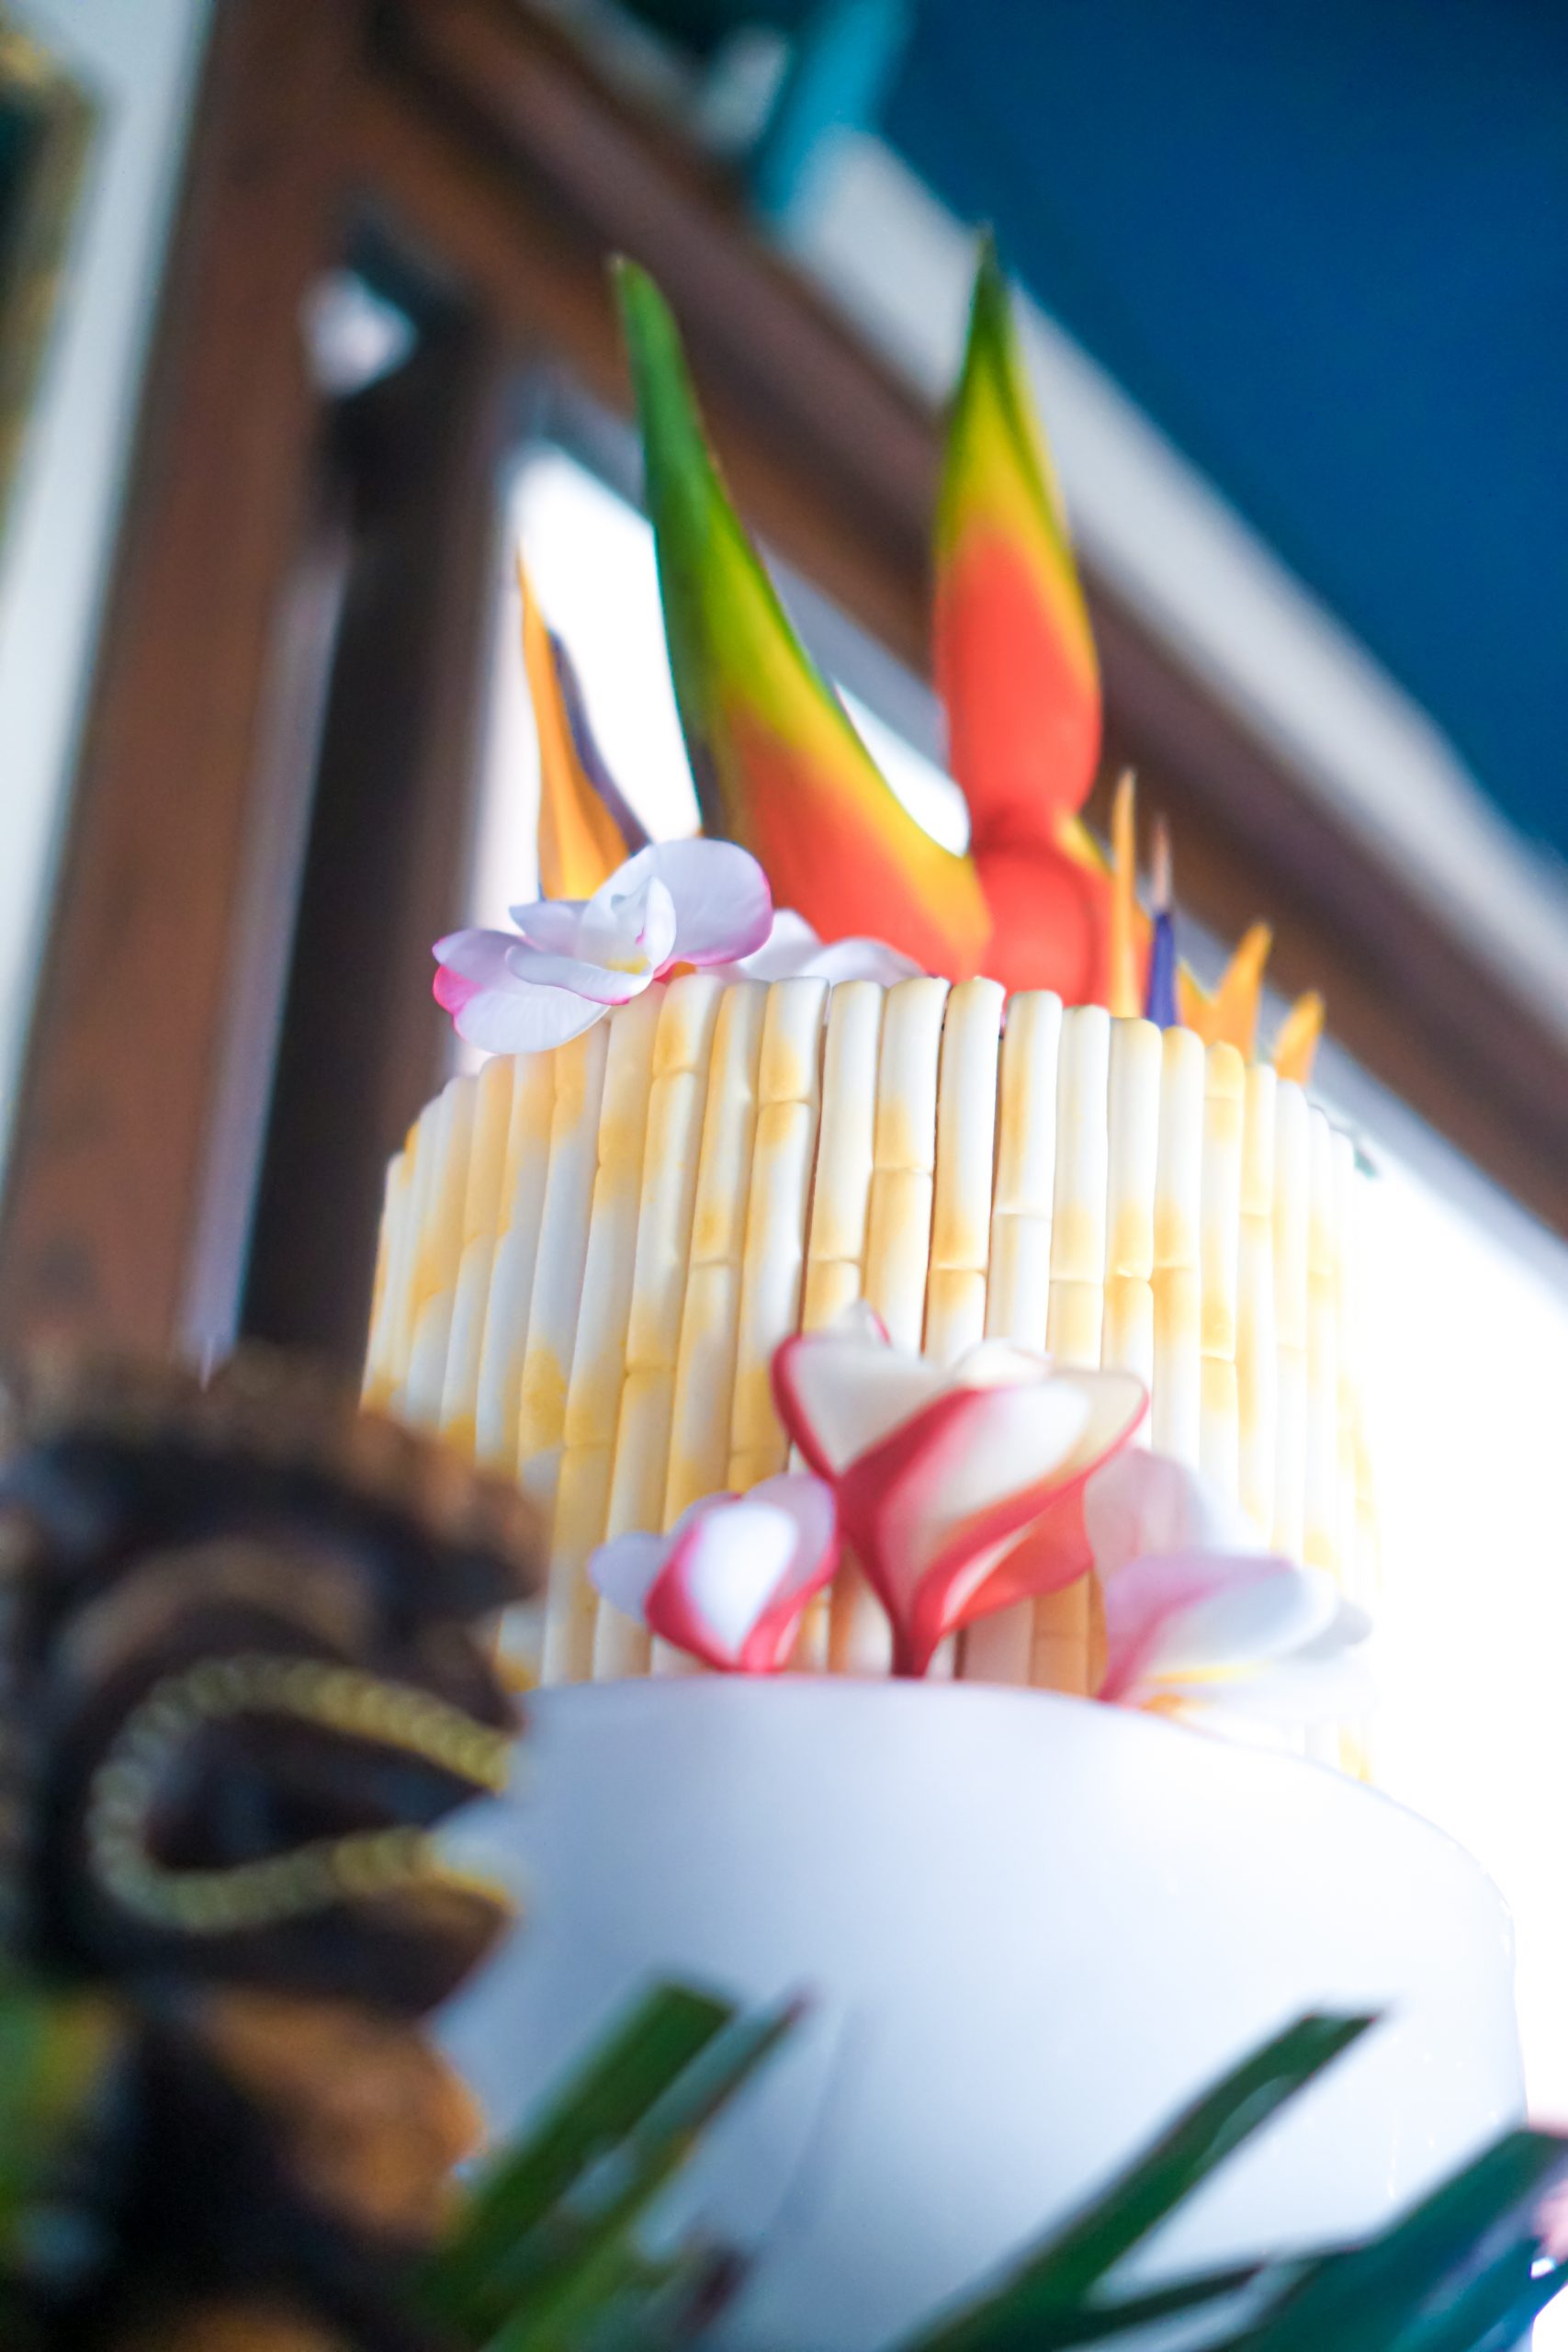 Tiki wiki Hawaiian wedding cake by aloha island Weddings with bamboo rolled fondant and Hawaiian tropical flowers of plumerias and birds of paradise